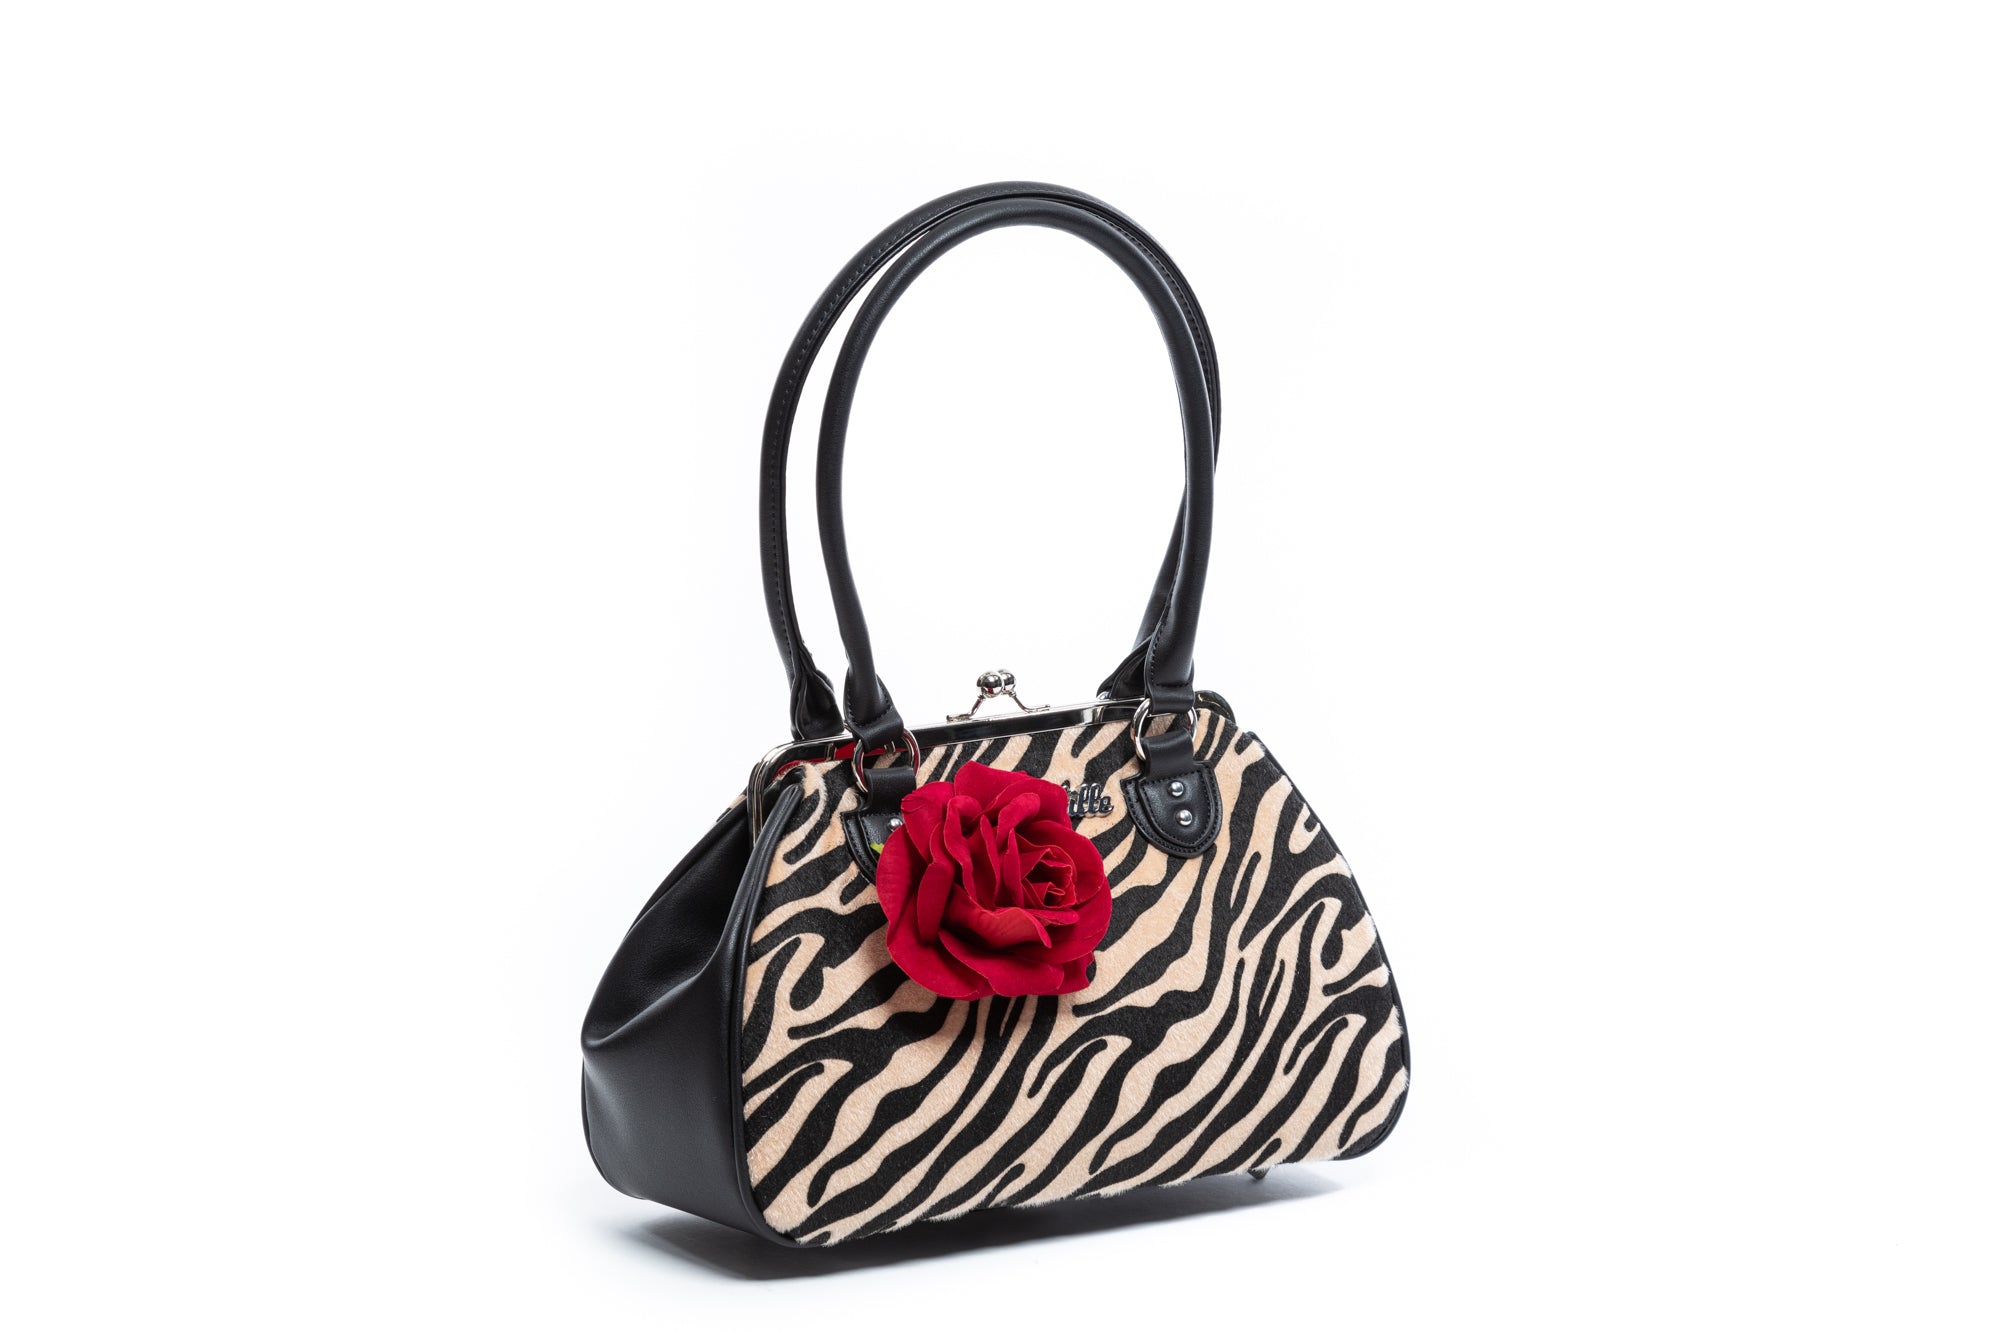 Lux de Ville-Retro, Vintage-Inspired Handbags, Wallets, and Sunglasses